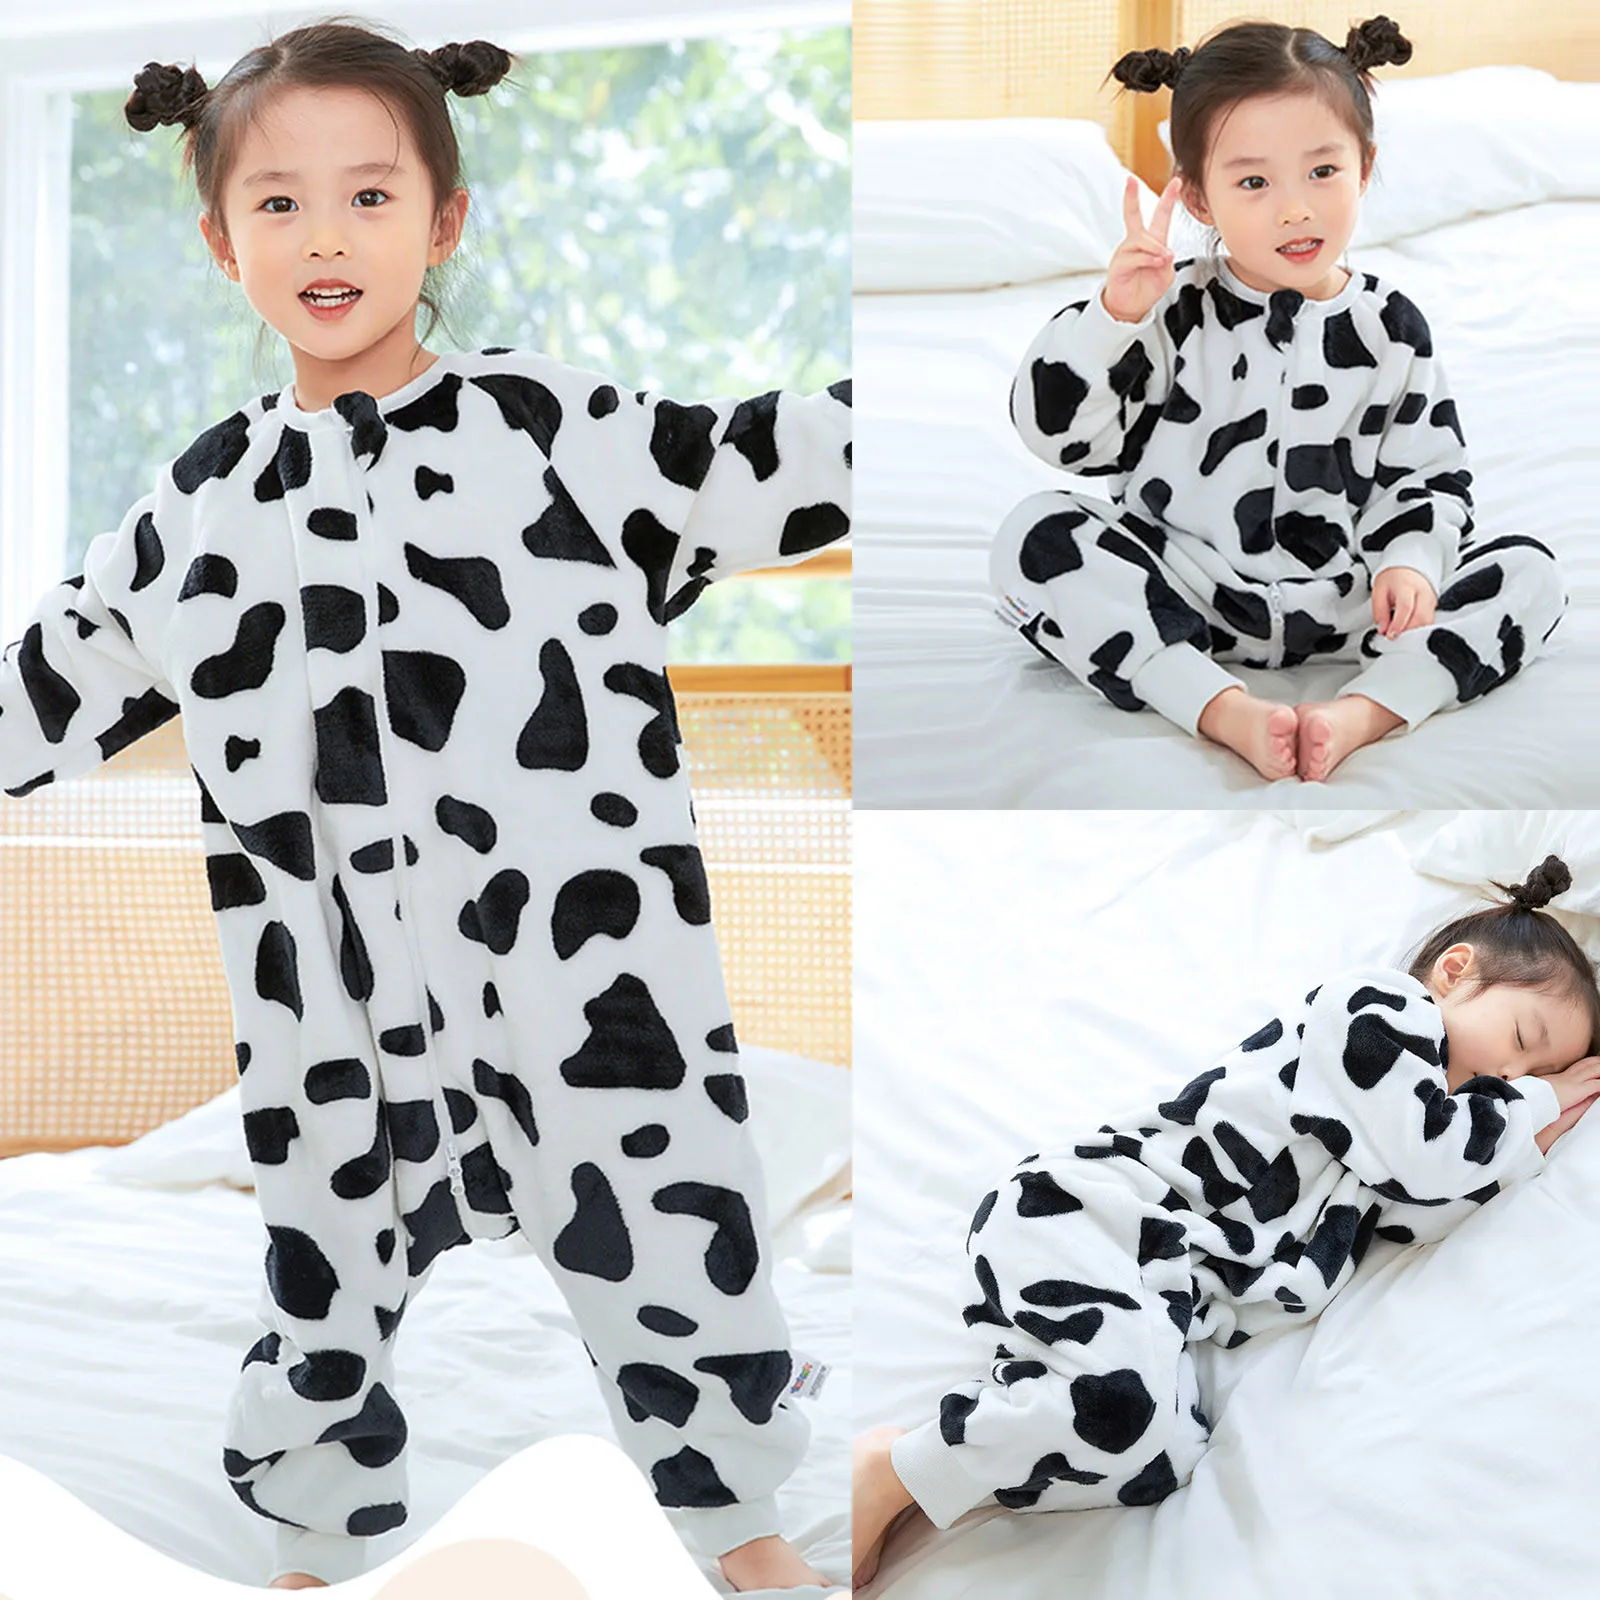 

Cute Animal Copsplay Costume Toddler Baby Girls Boys Onesie Jumpsuits Fuzzy Warm Fall Winter Home Clothes Sleepwear Romper 1-6Y